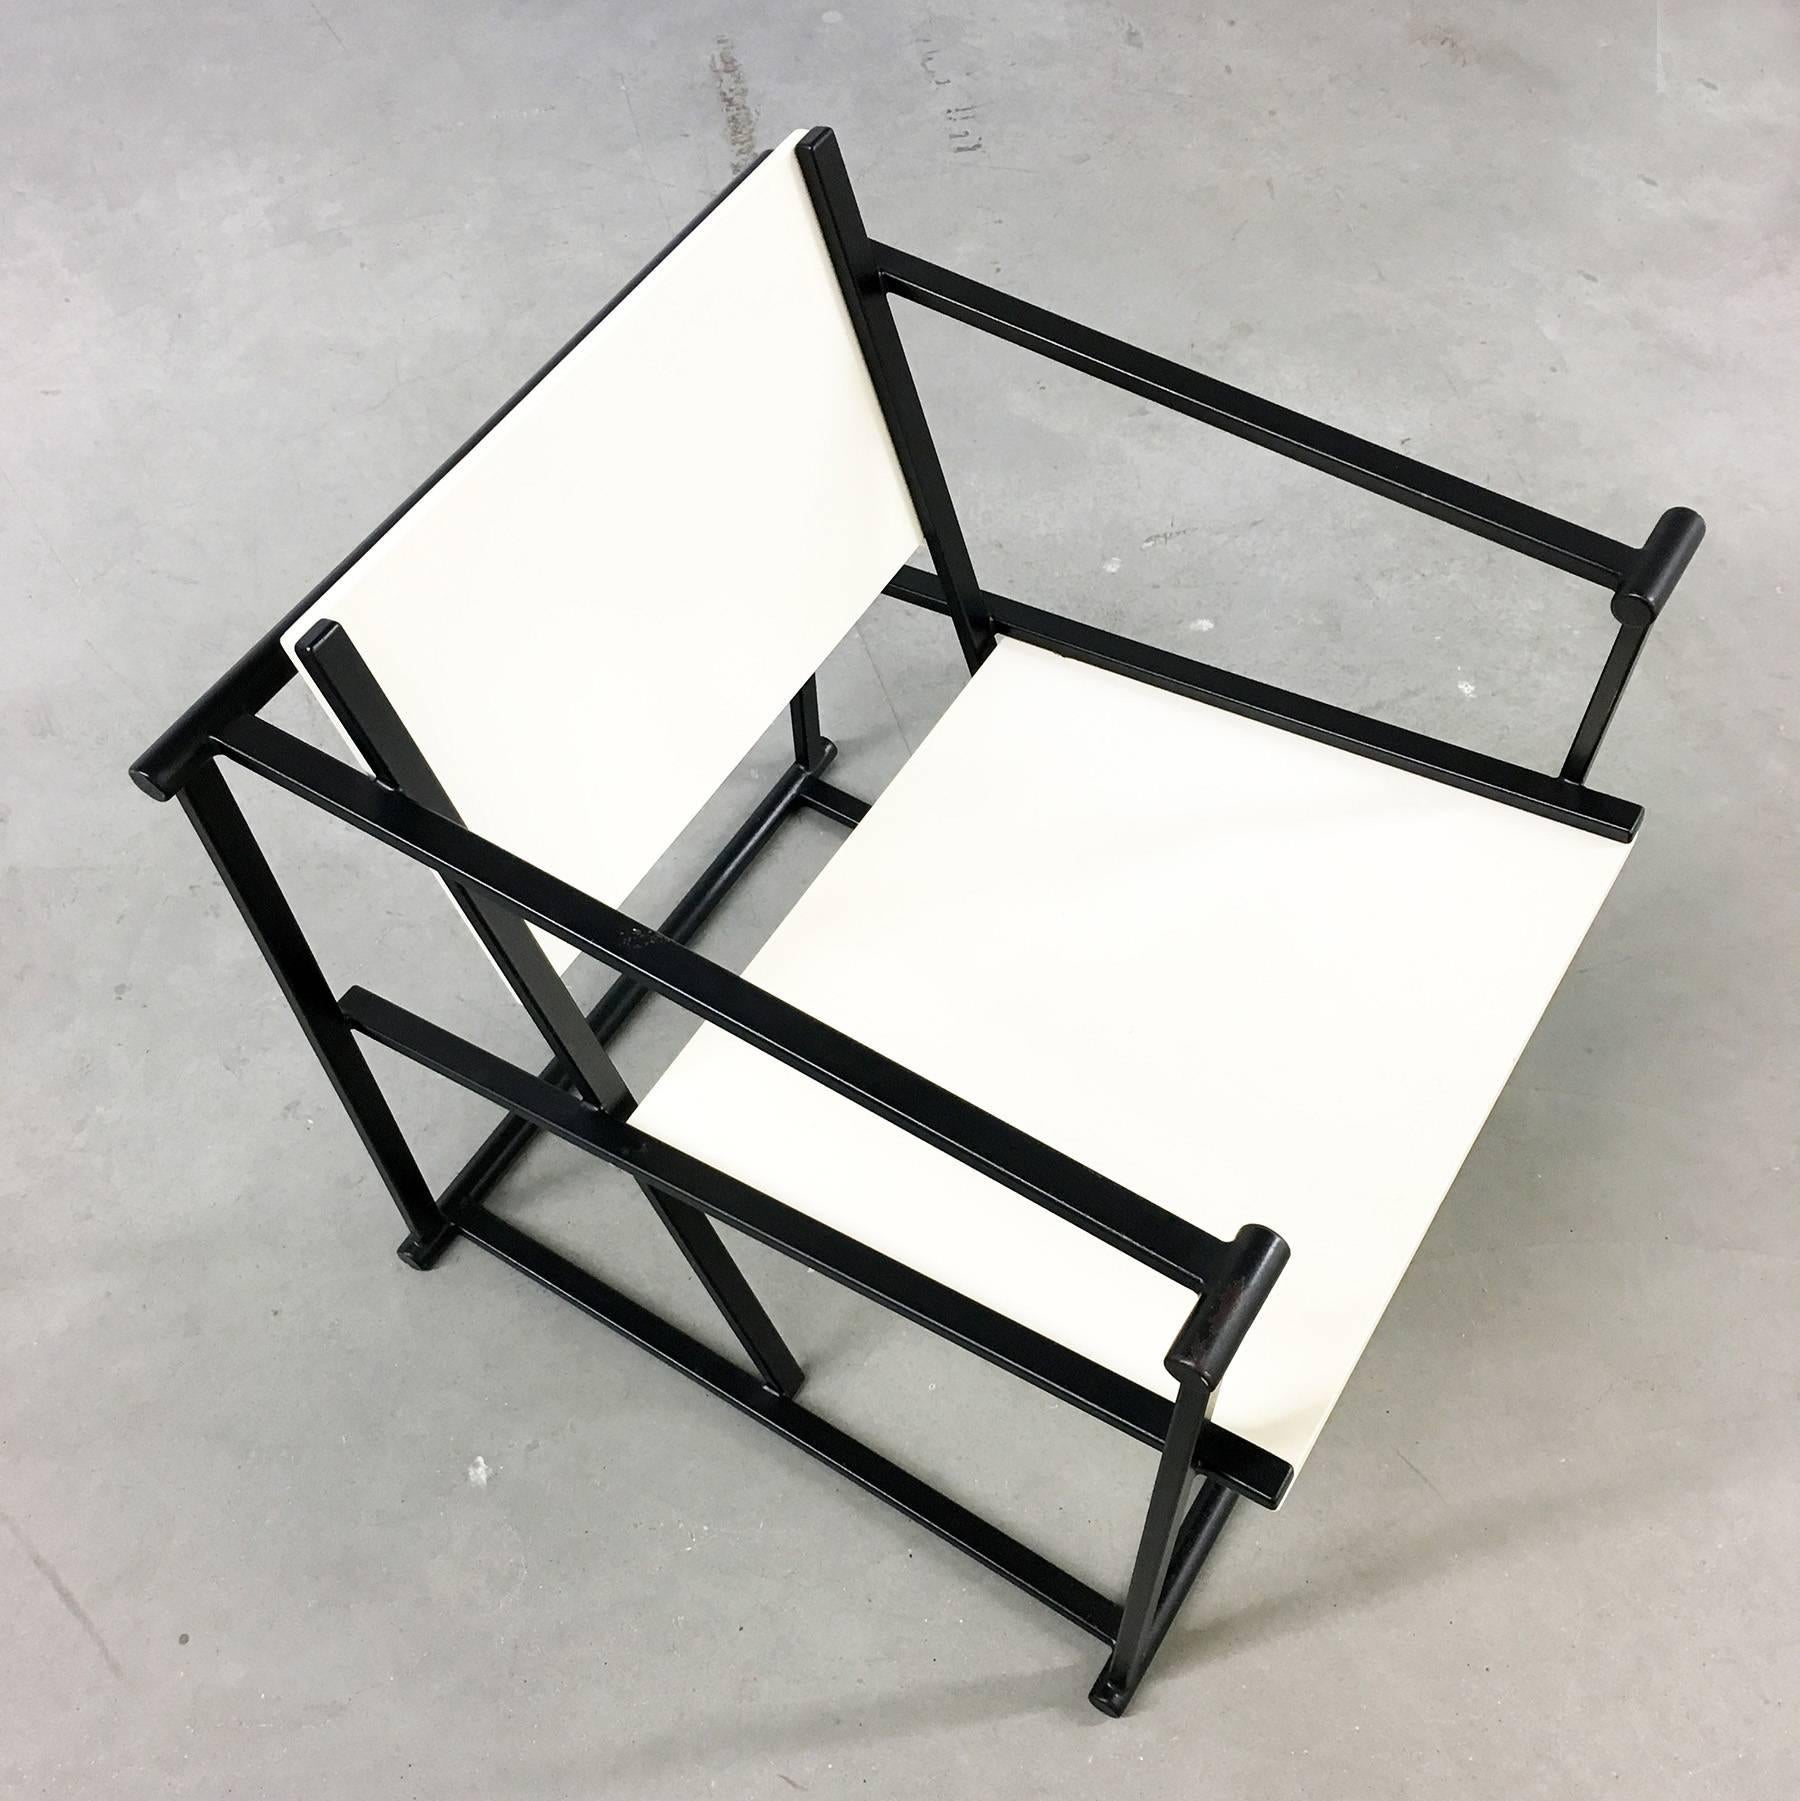 Dutch Two FM 60 Cube Chairs by Radboud Van Beekum for Pastoe